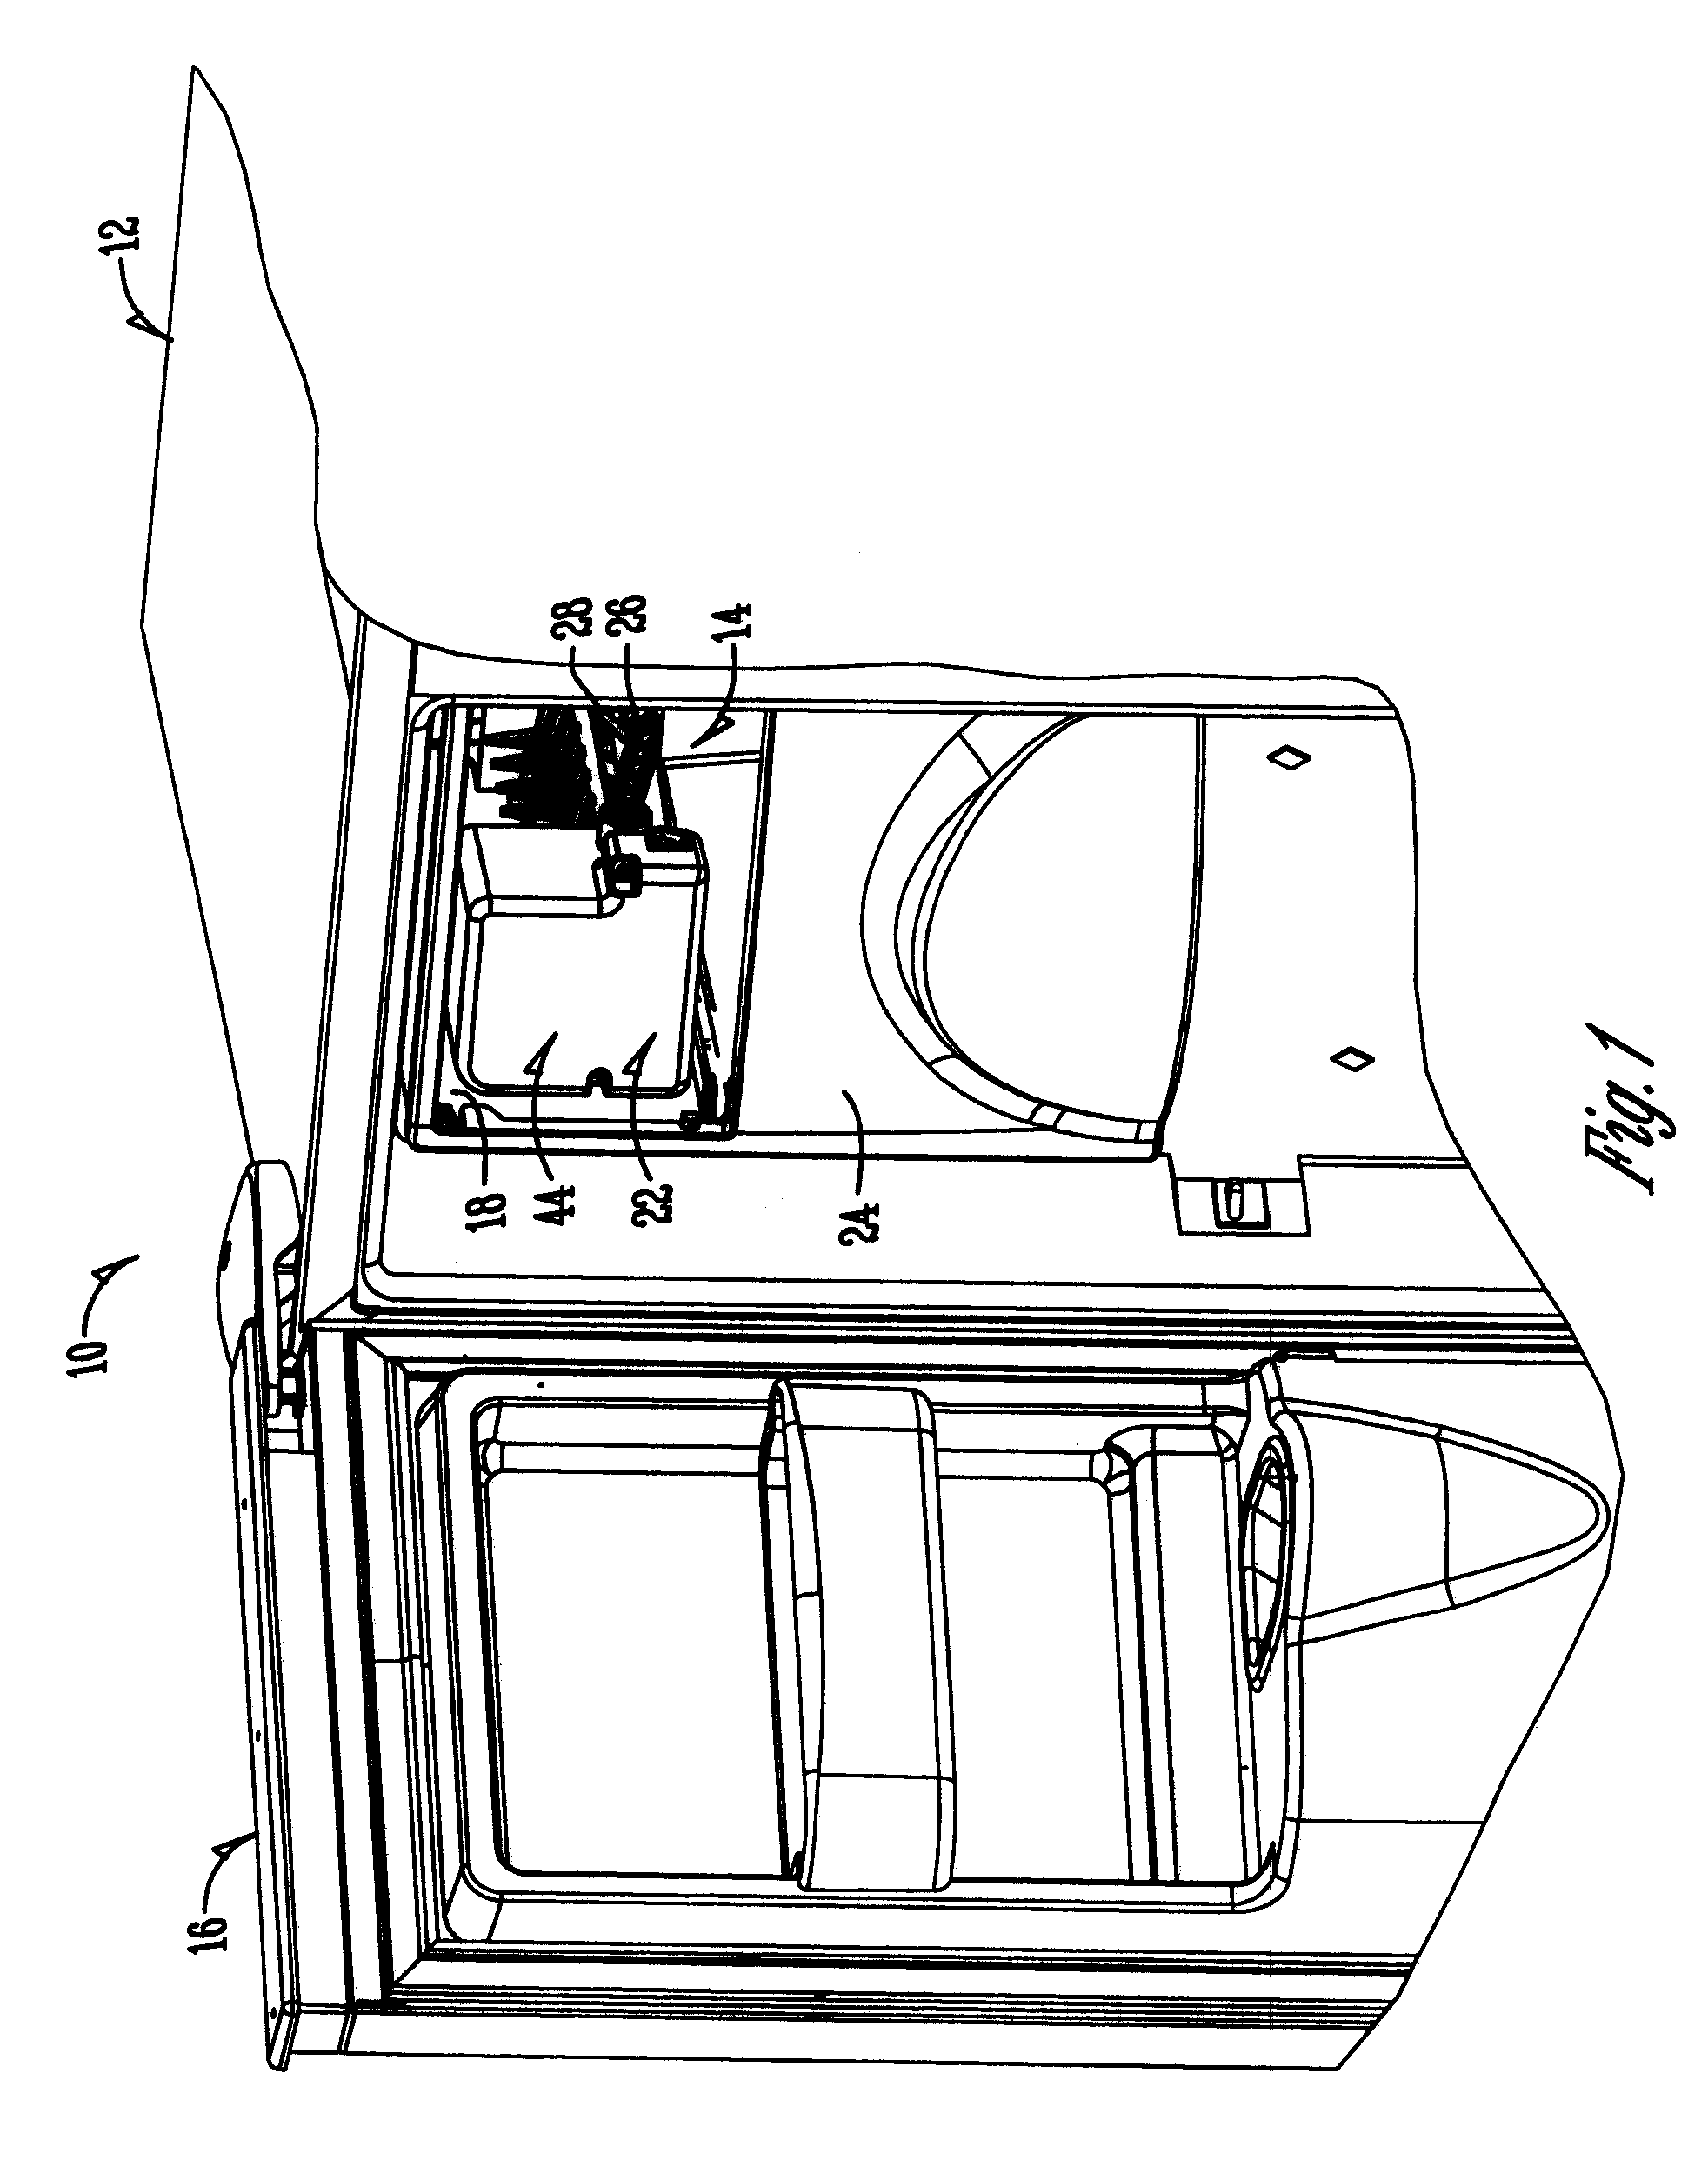 Refrigerator icemaker with raised perimeter walls